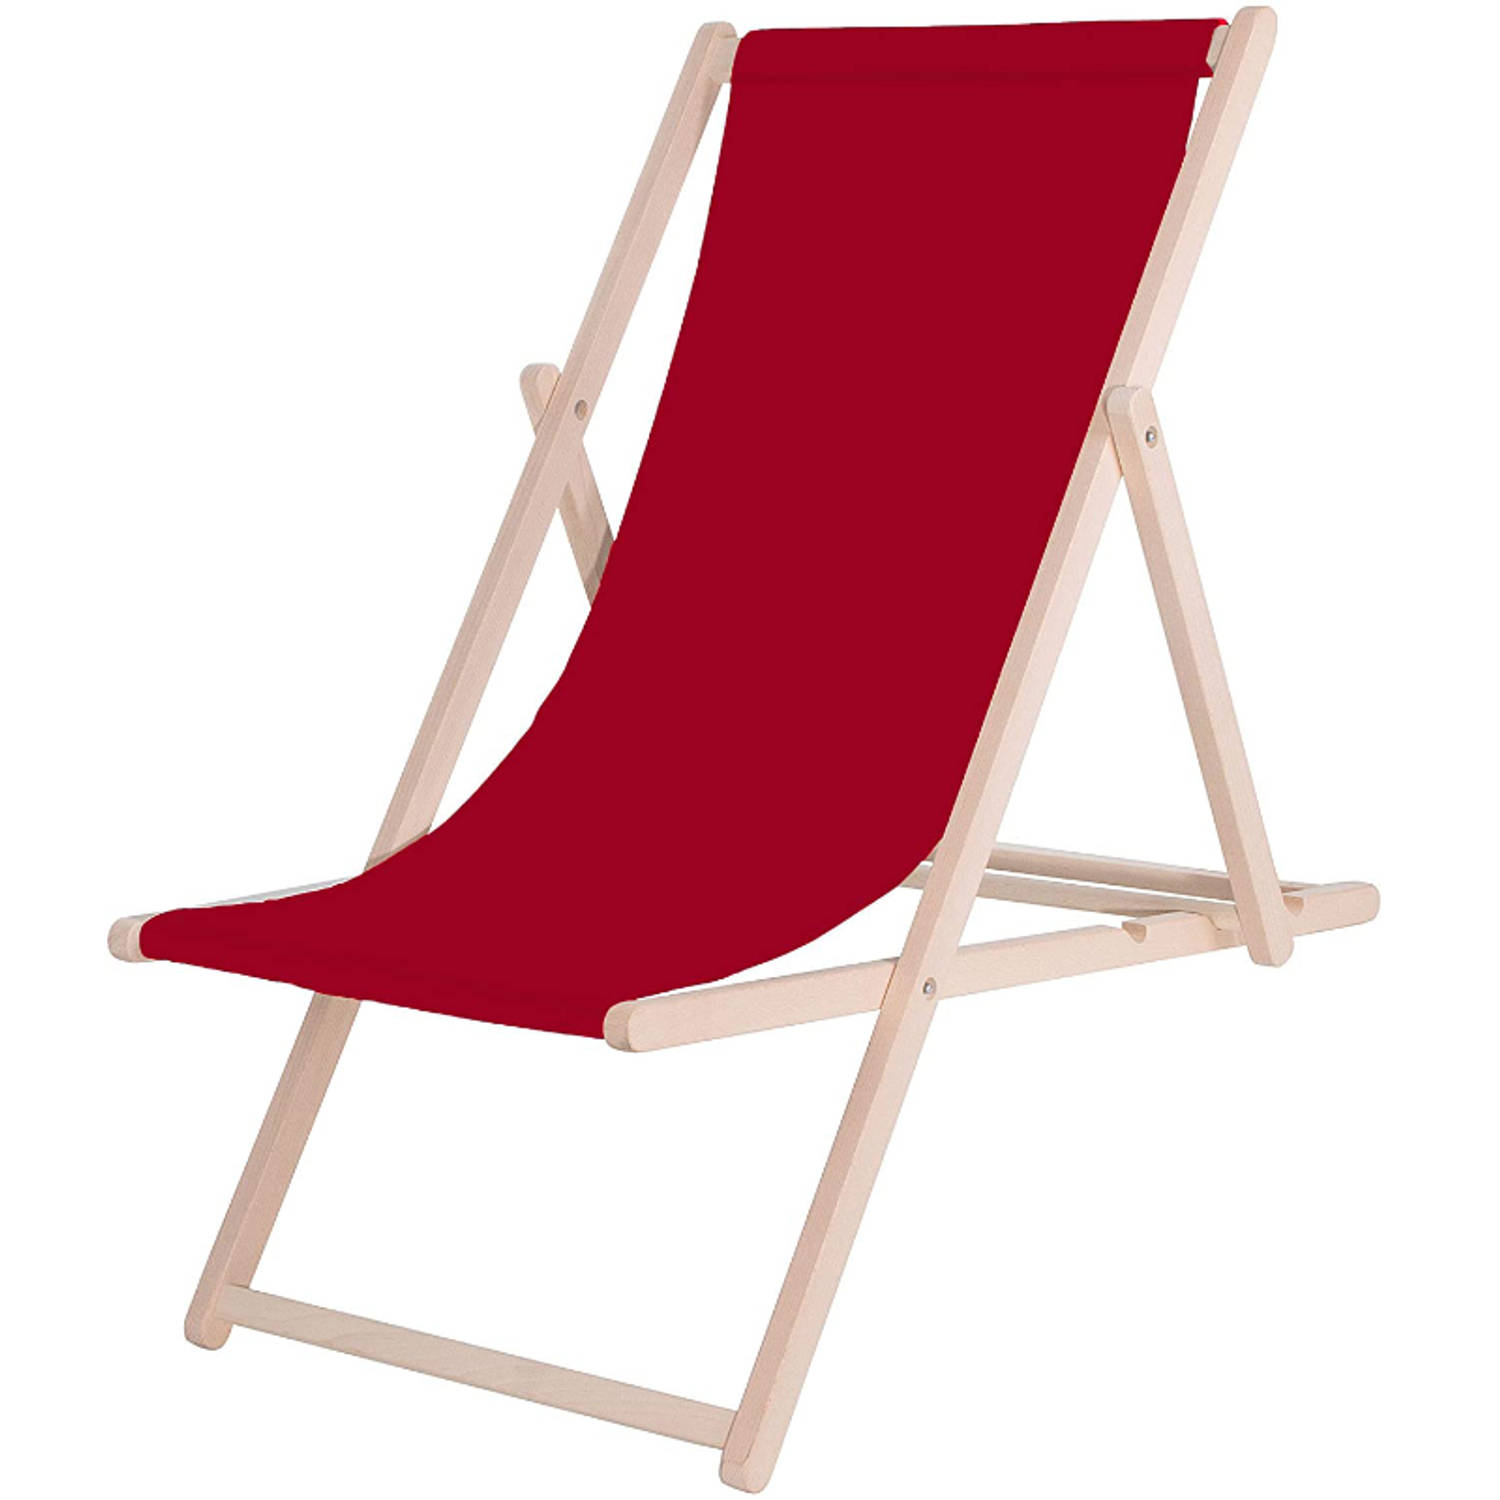 Ligbed Strandstoel Ligstoel Verstelbaar Beukenhout Handgemaakt Bordeaux Rood